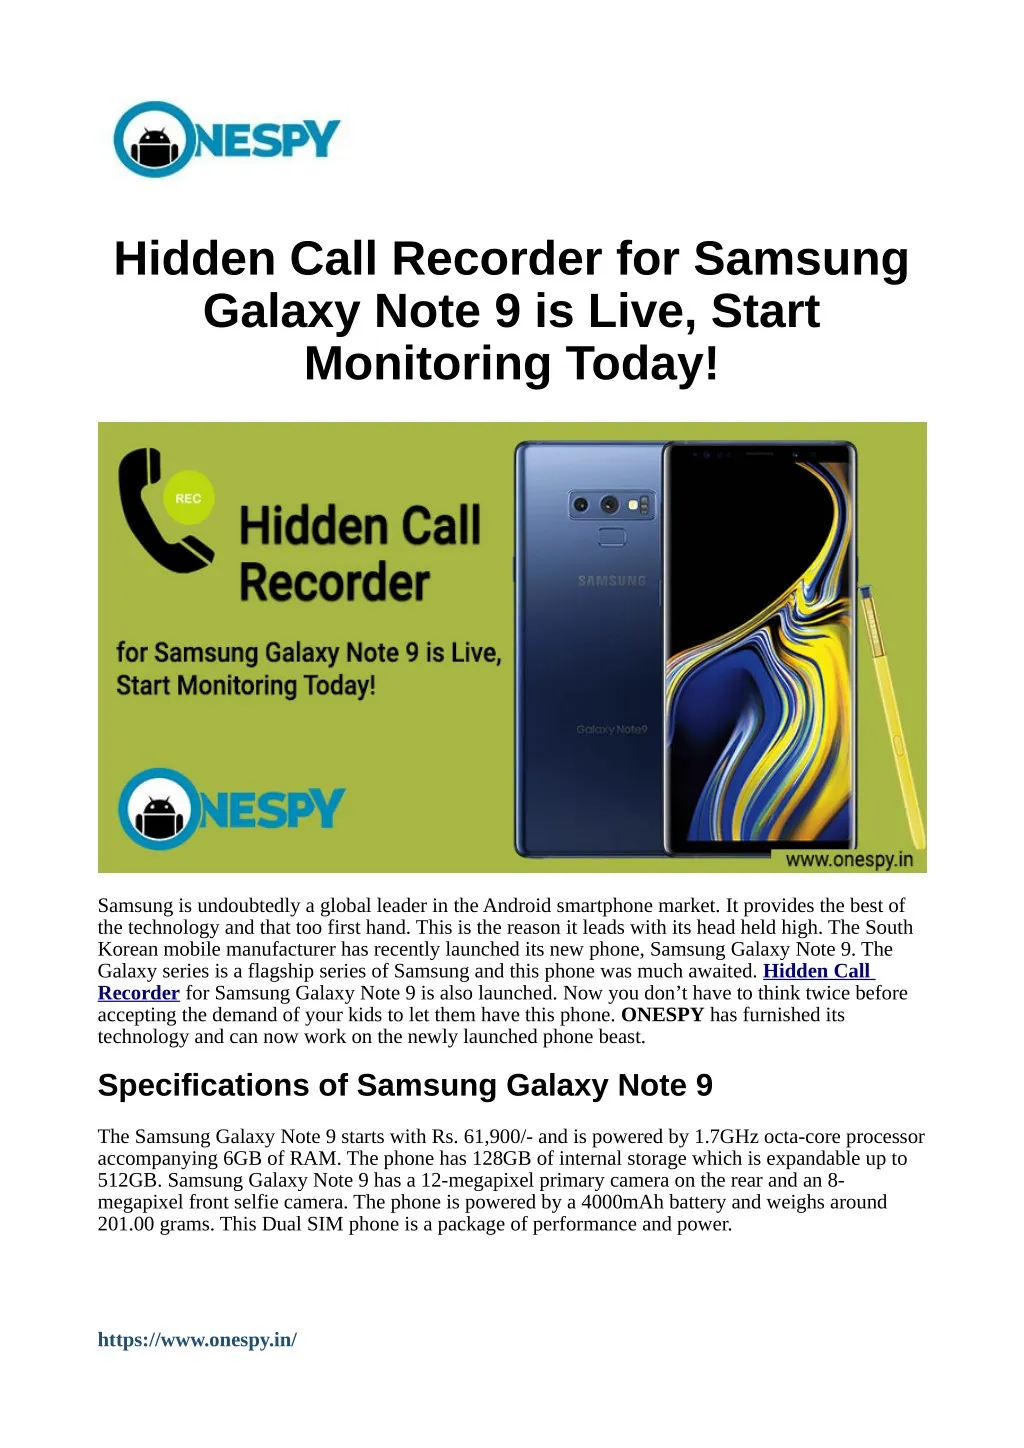 hidden call recorder for samsung galaxy note